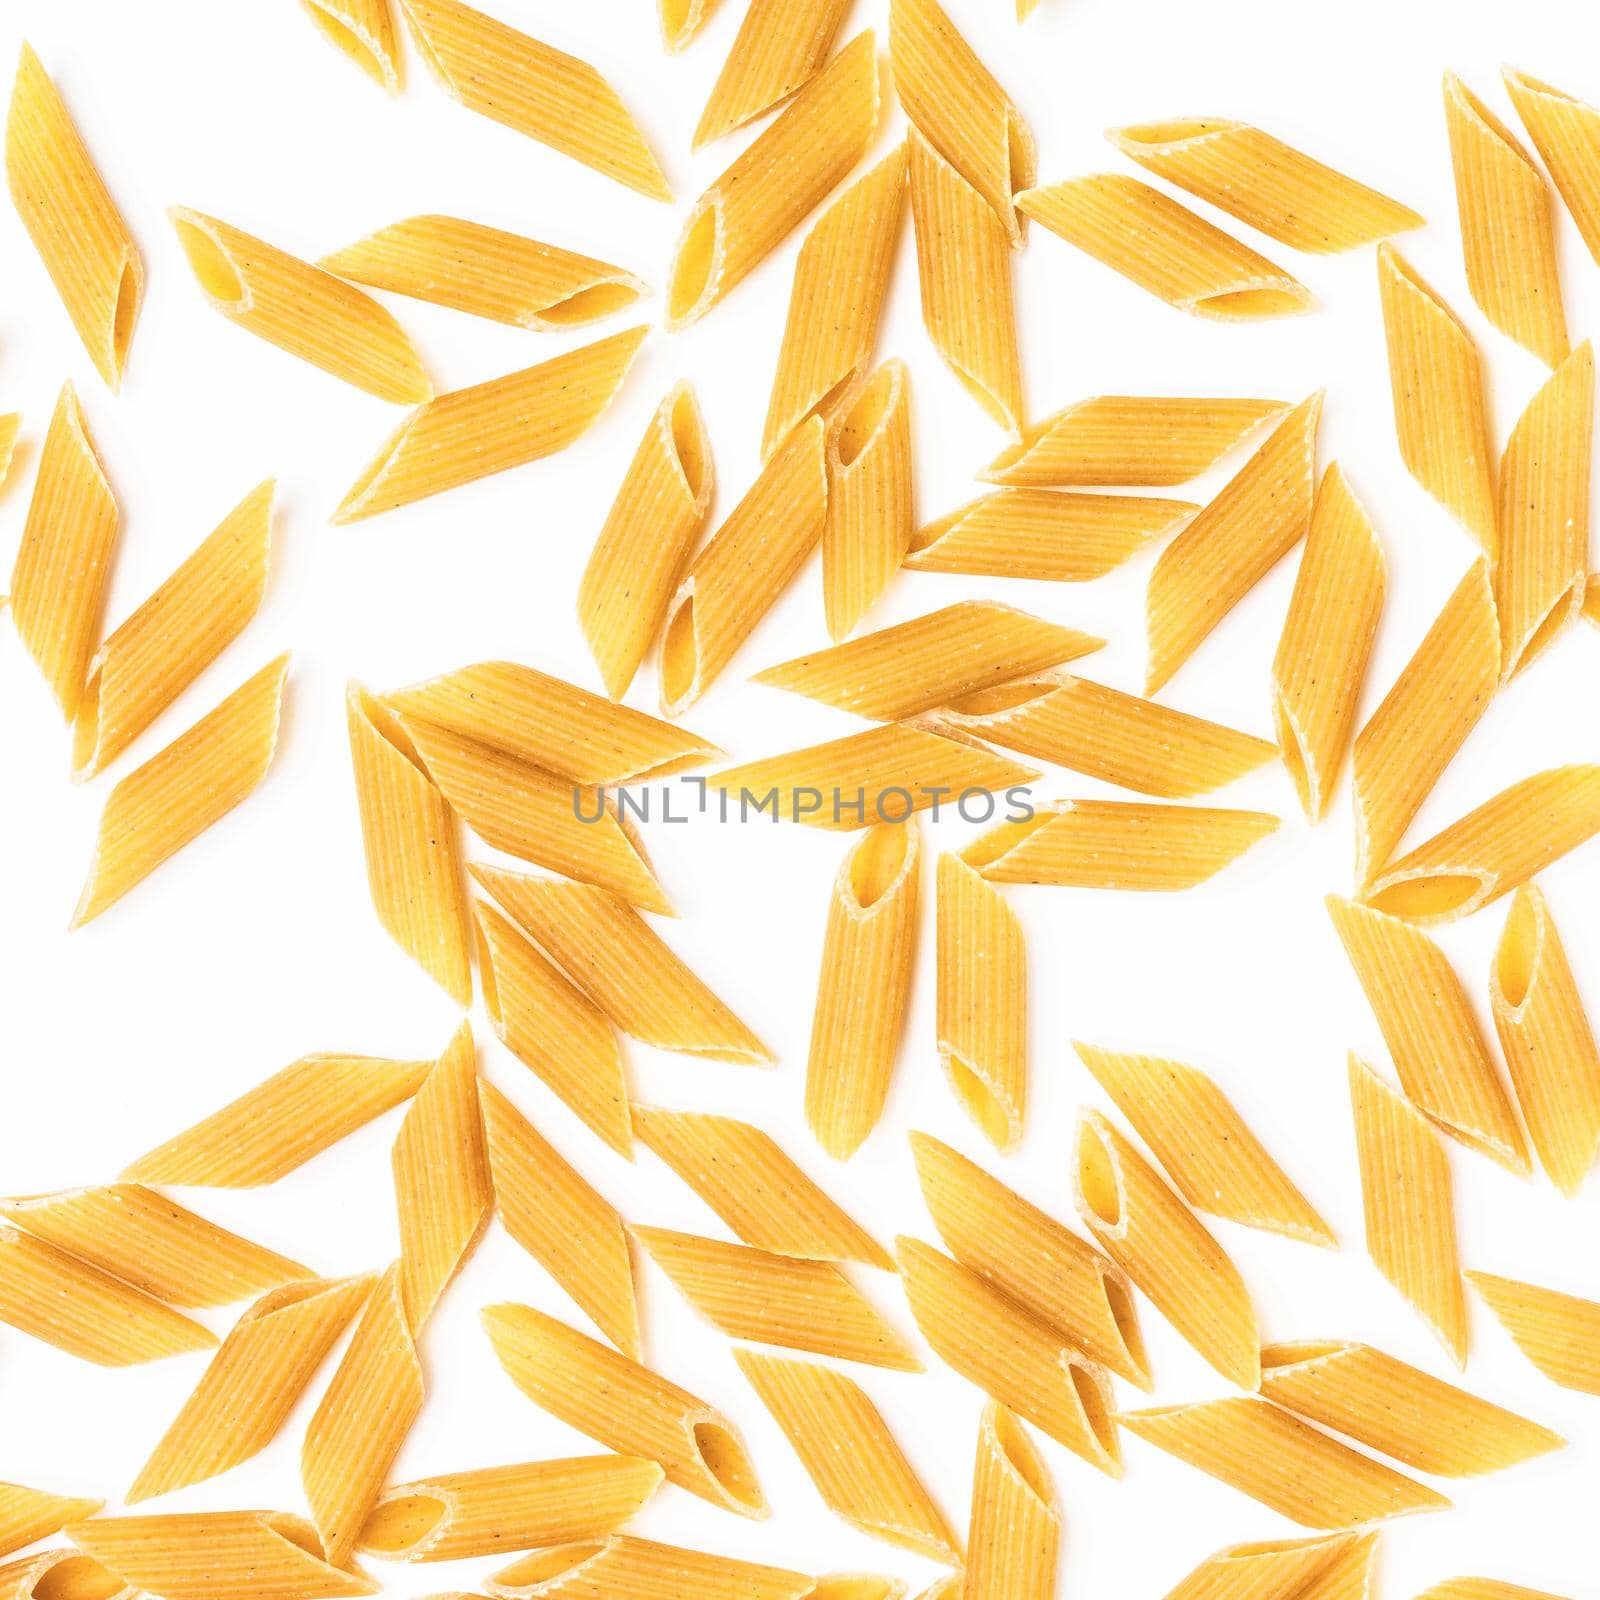 Penne pasta by germanopoli